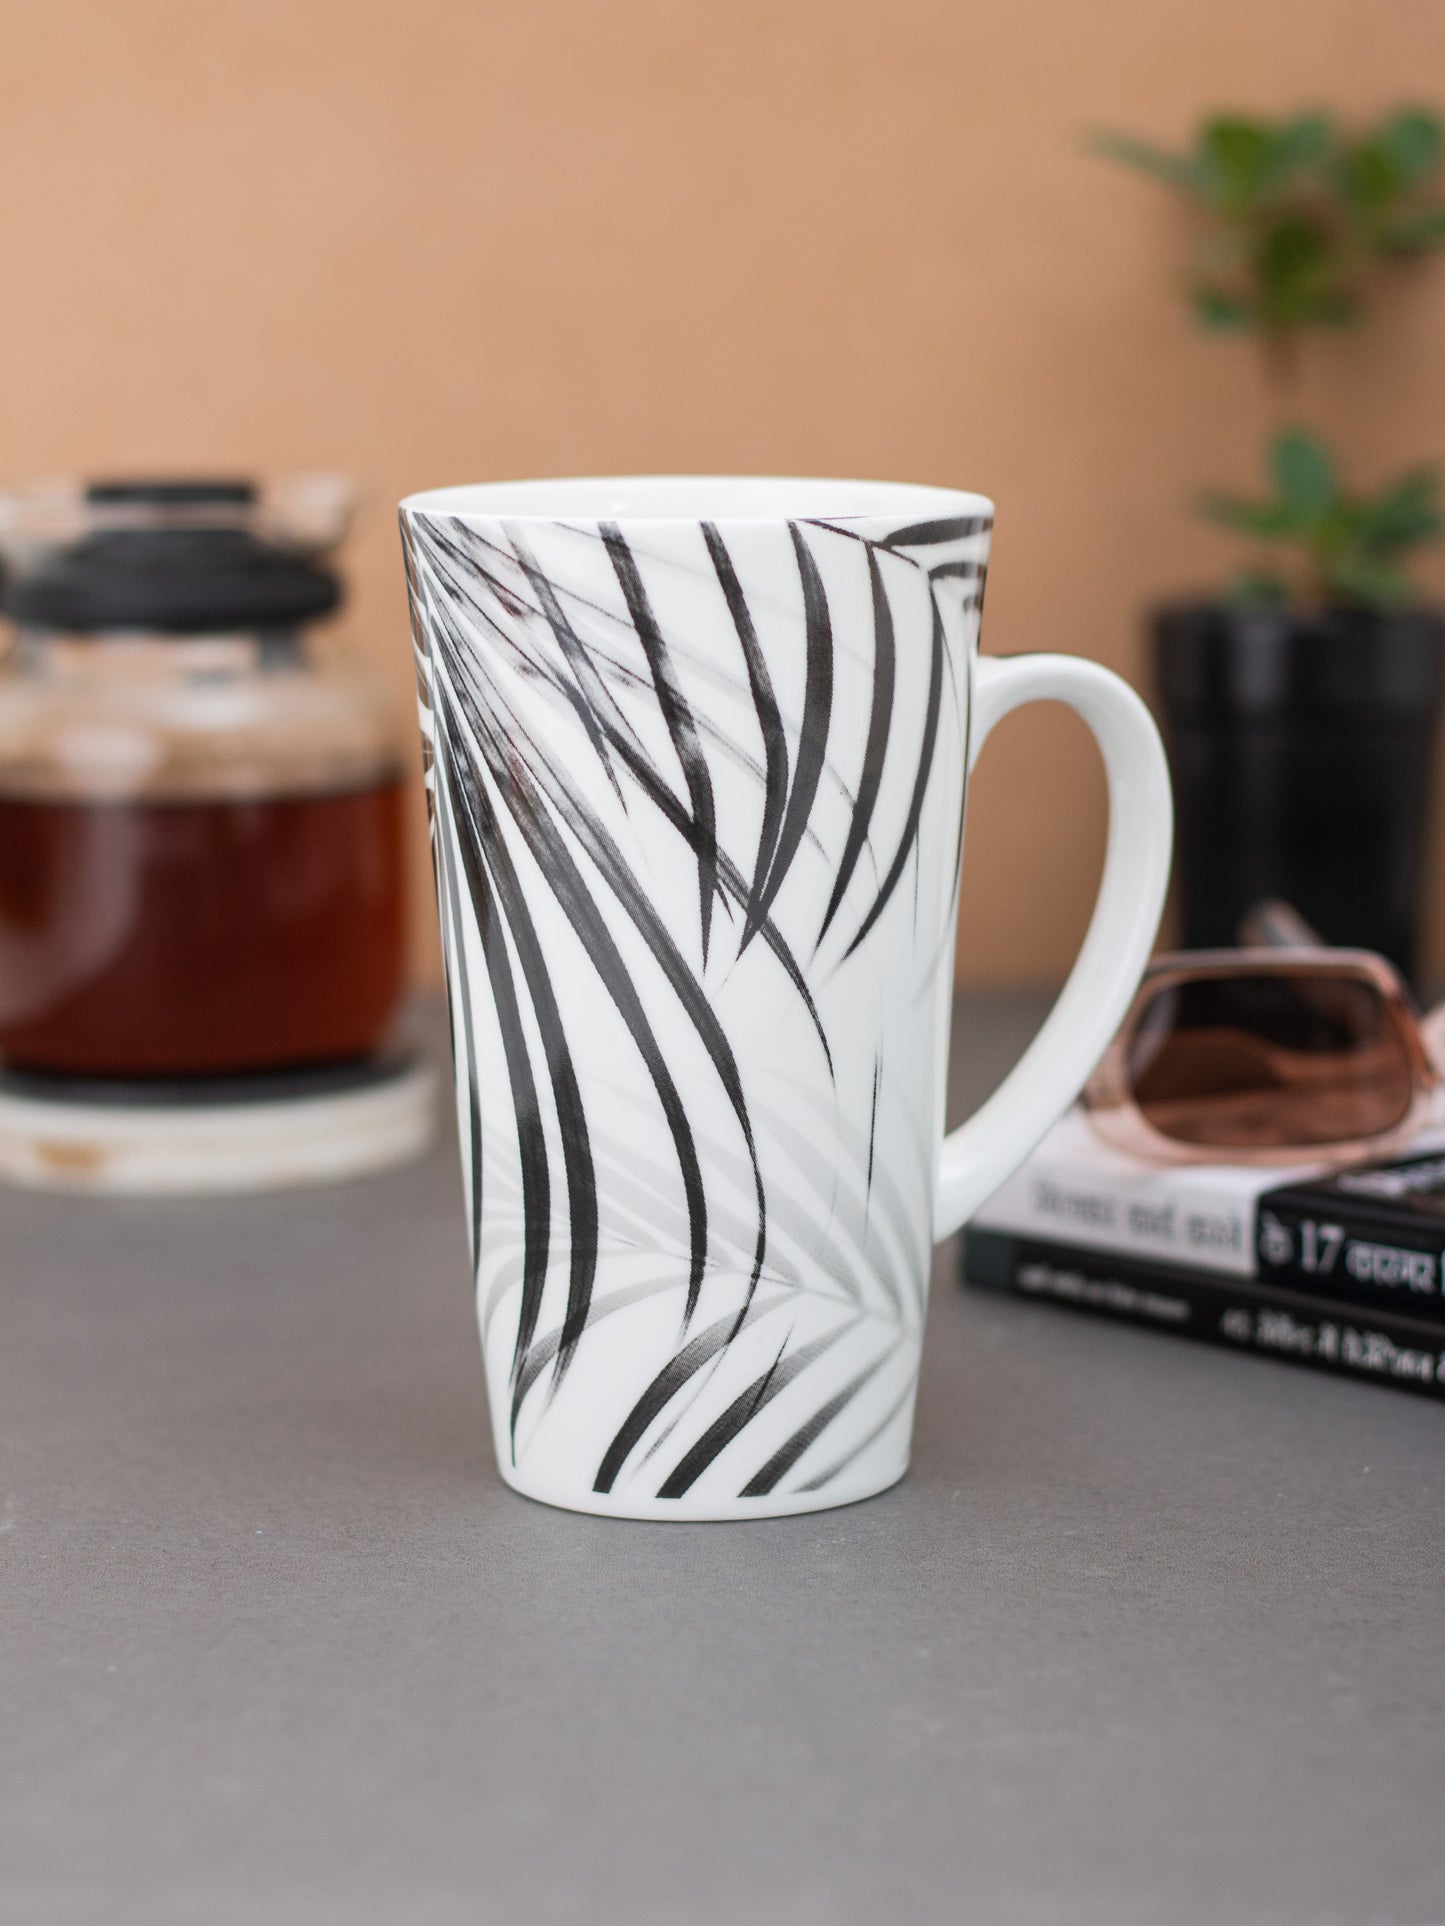 Tall Monochrome Coffee & Milk Mug, 600ml, 1 Piece (MC709)